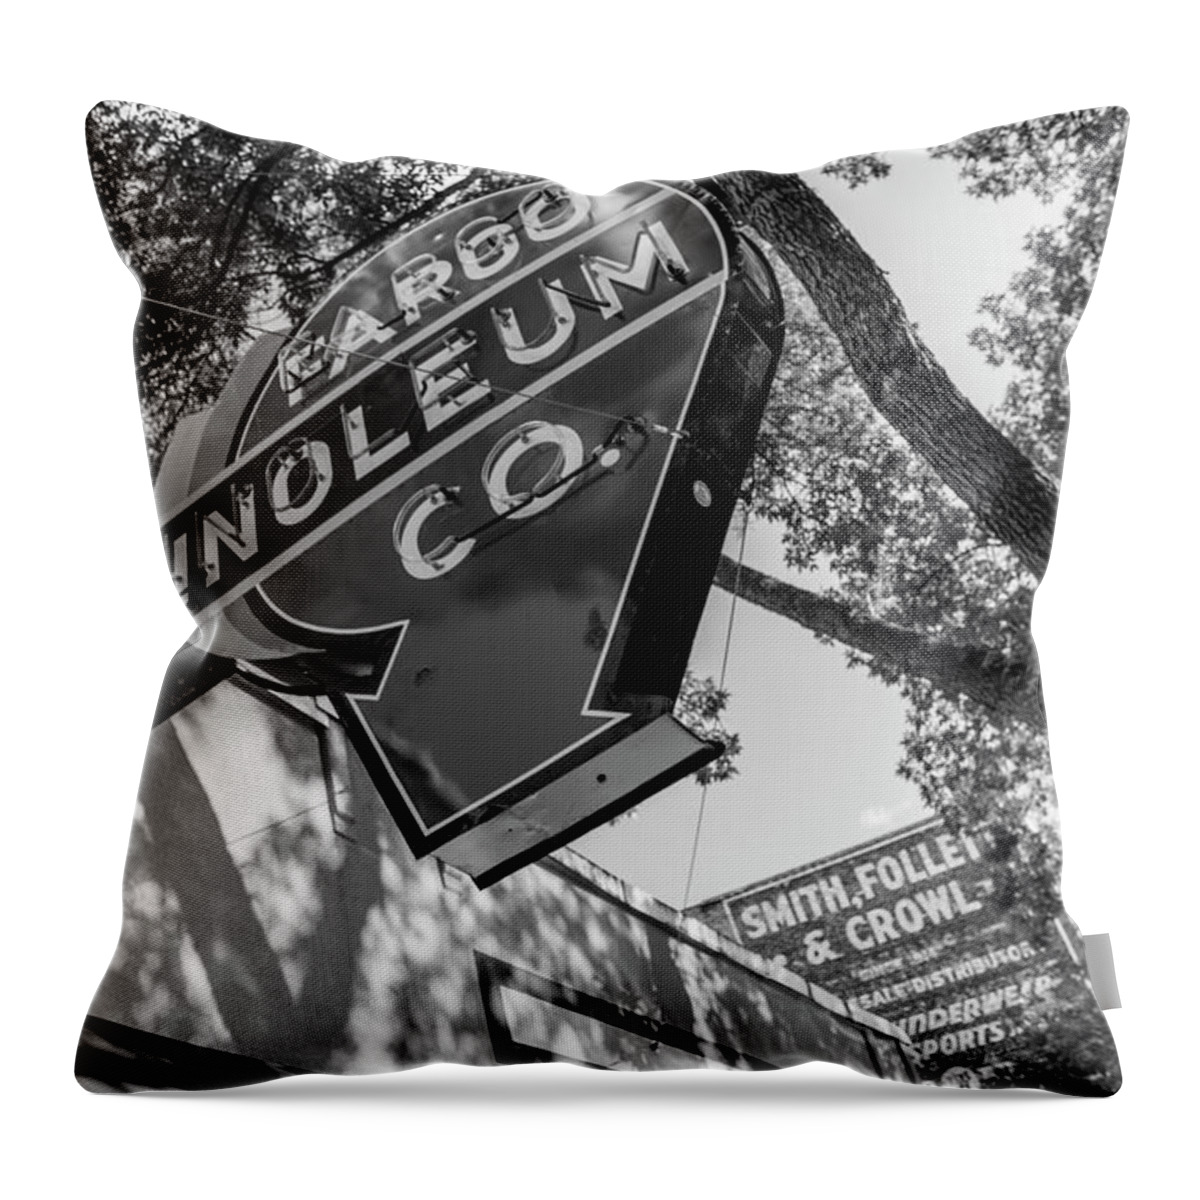 North Dakota Throw Pillow featuring the photograph Fargo Linoleum Company by John McGraw